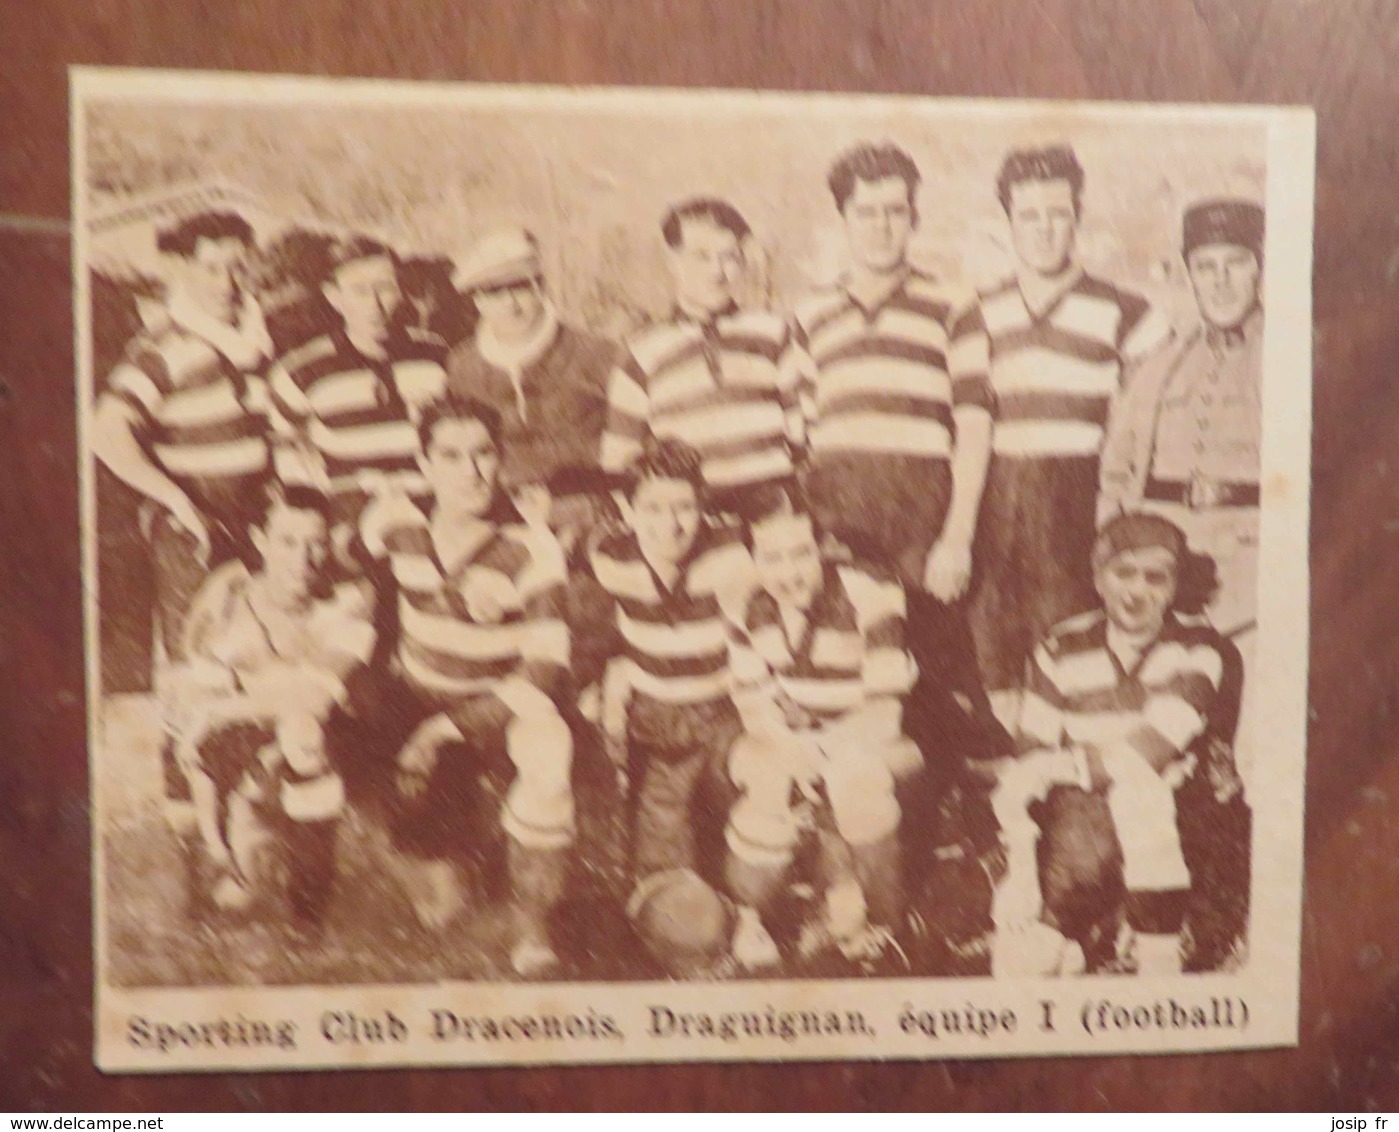 DRAGUIGNAN (VAR): SPORTING CLUB DRACENOIS- ÉQUIPE 1 (FOOTBALL) (PHOTO DE JOURNAL: 11/1931) - Côte D'Azur